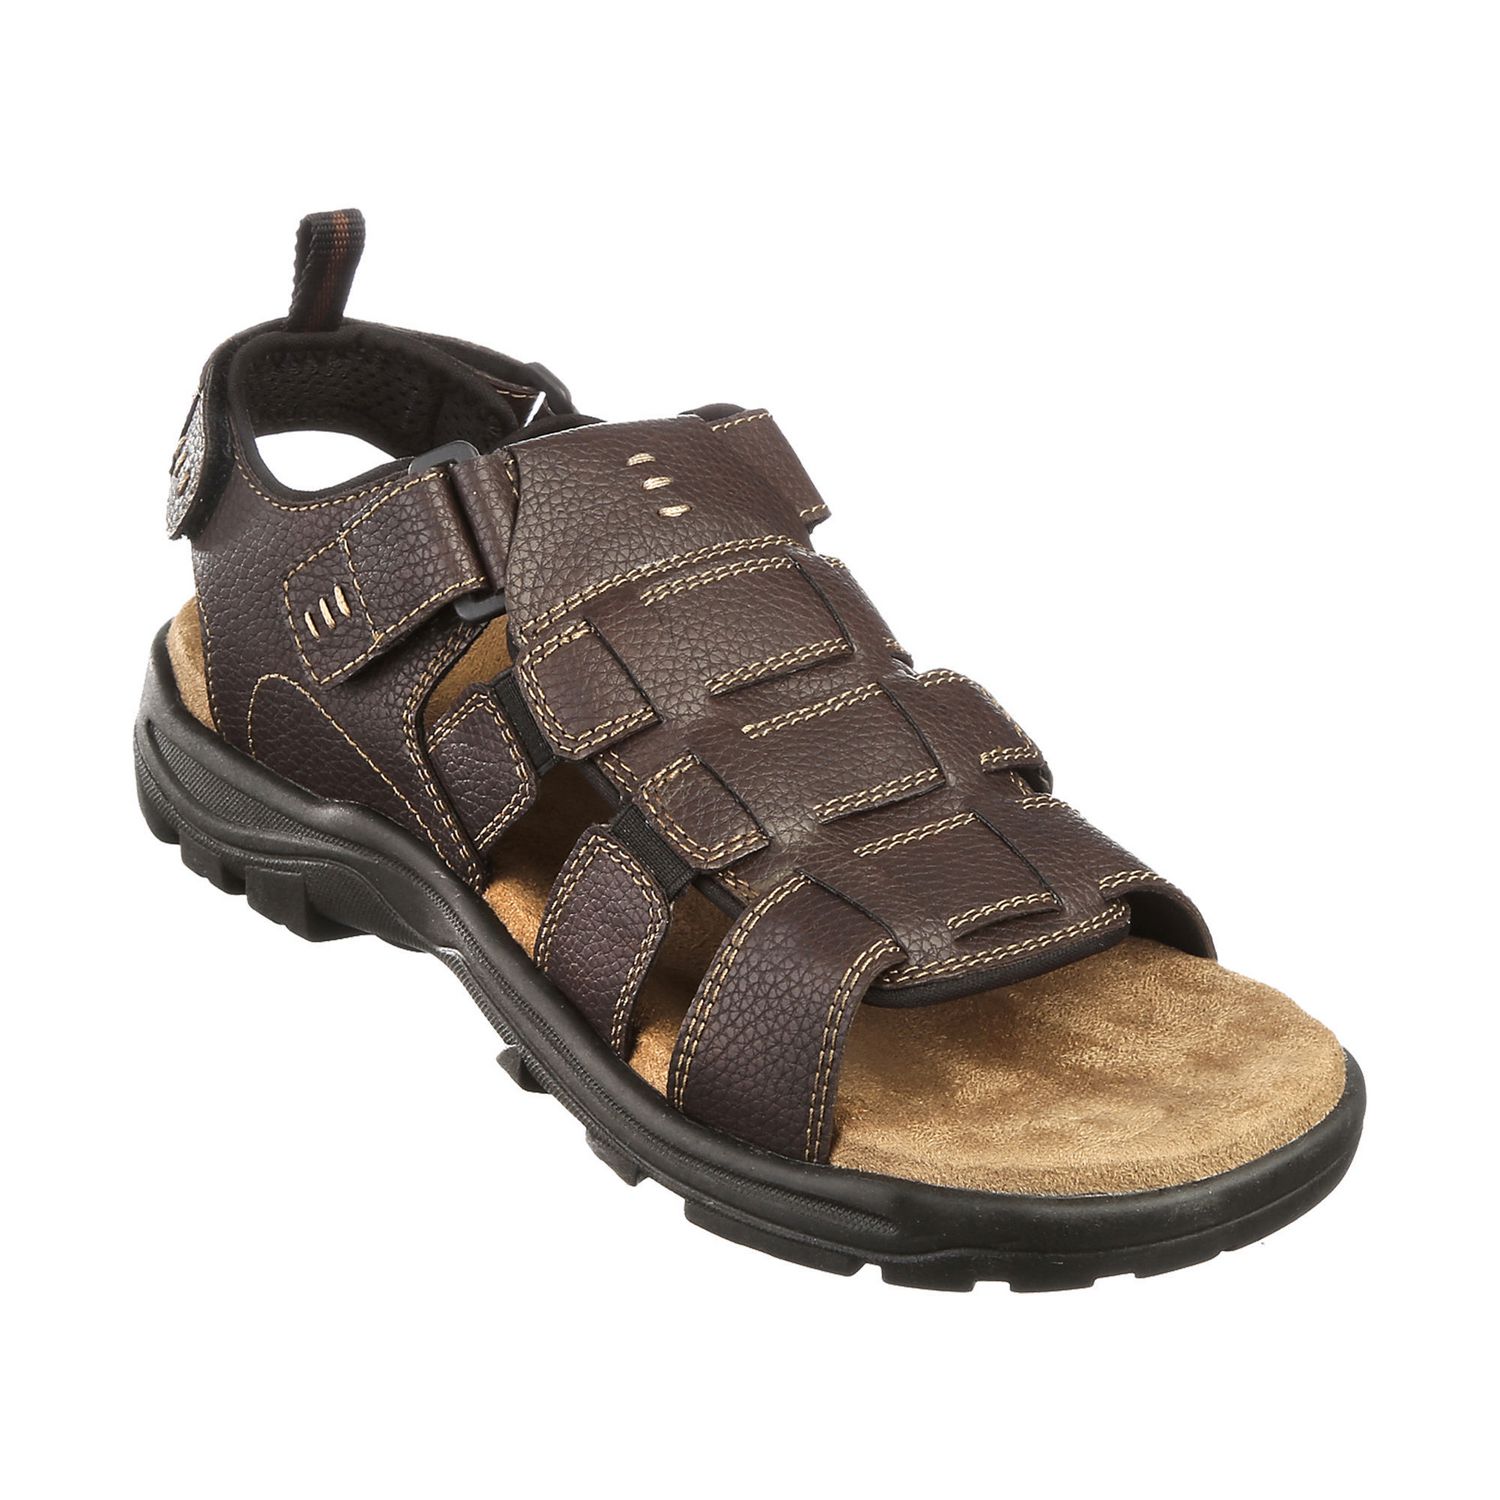 George Men's Lightweight Sandals | Walmart Canada